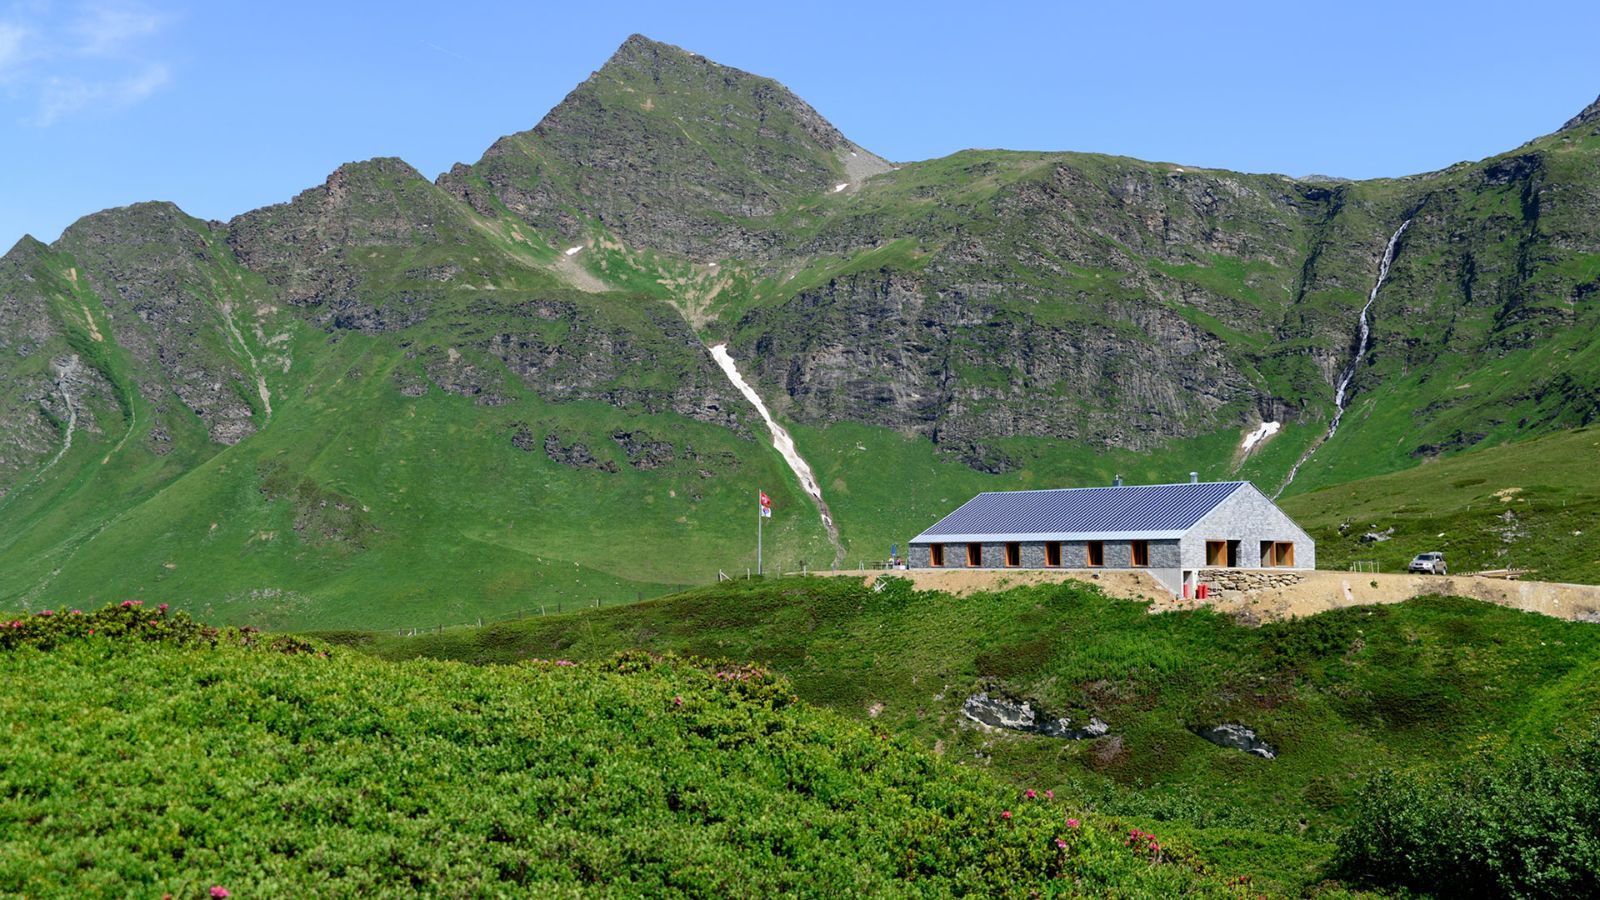 The Cadagno Hut, Piora valley